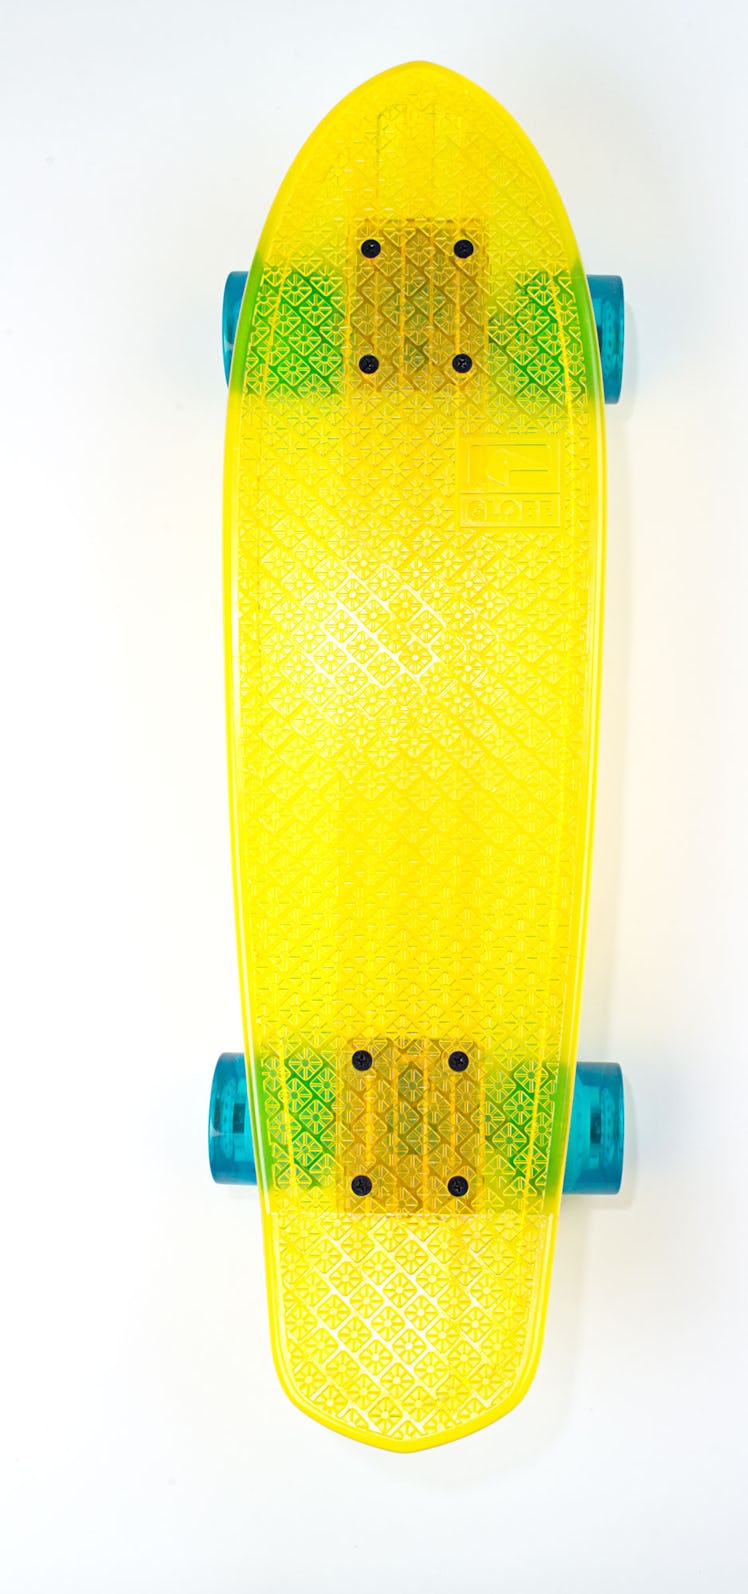 Globe skateboard, $132, [alexandalexa.com](http://alexandalexa.com/).